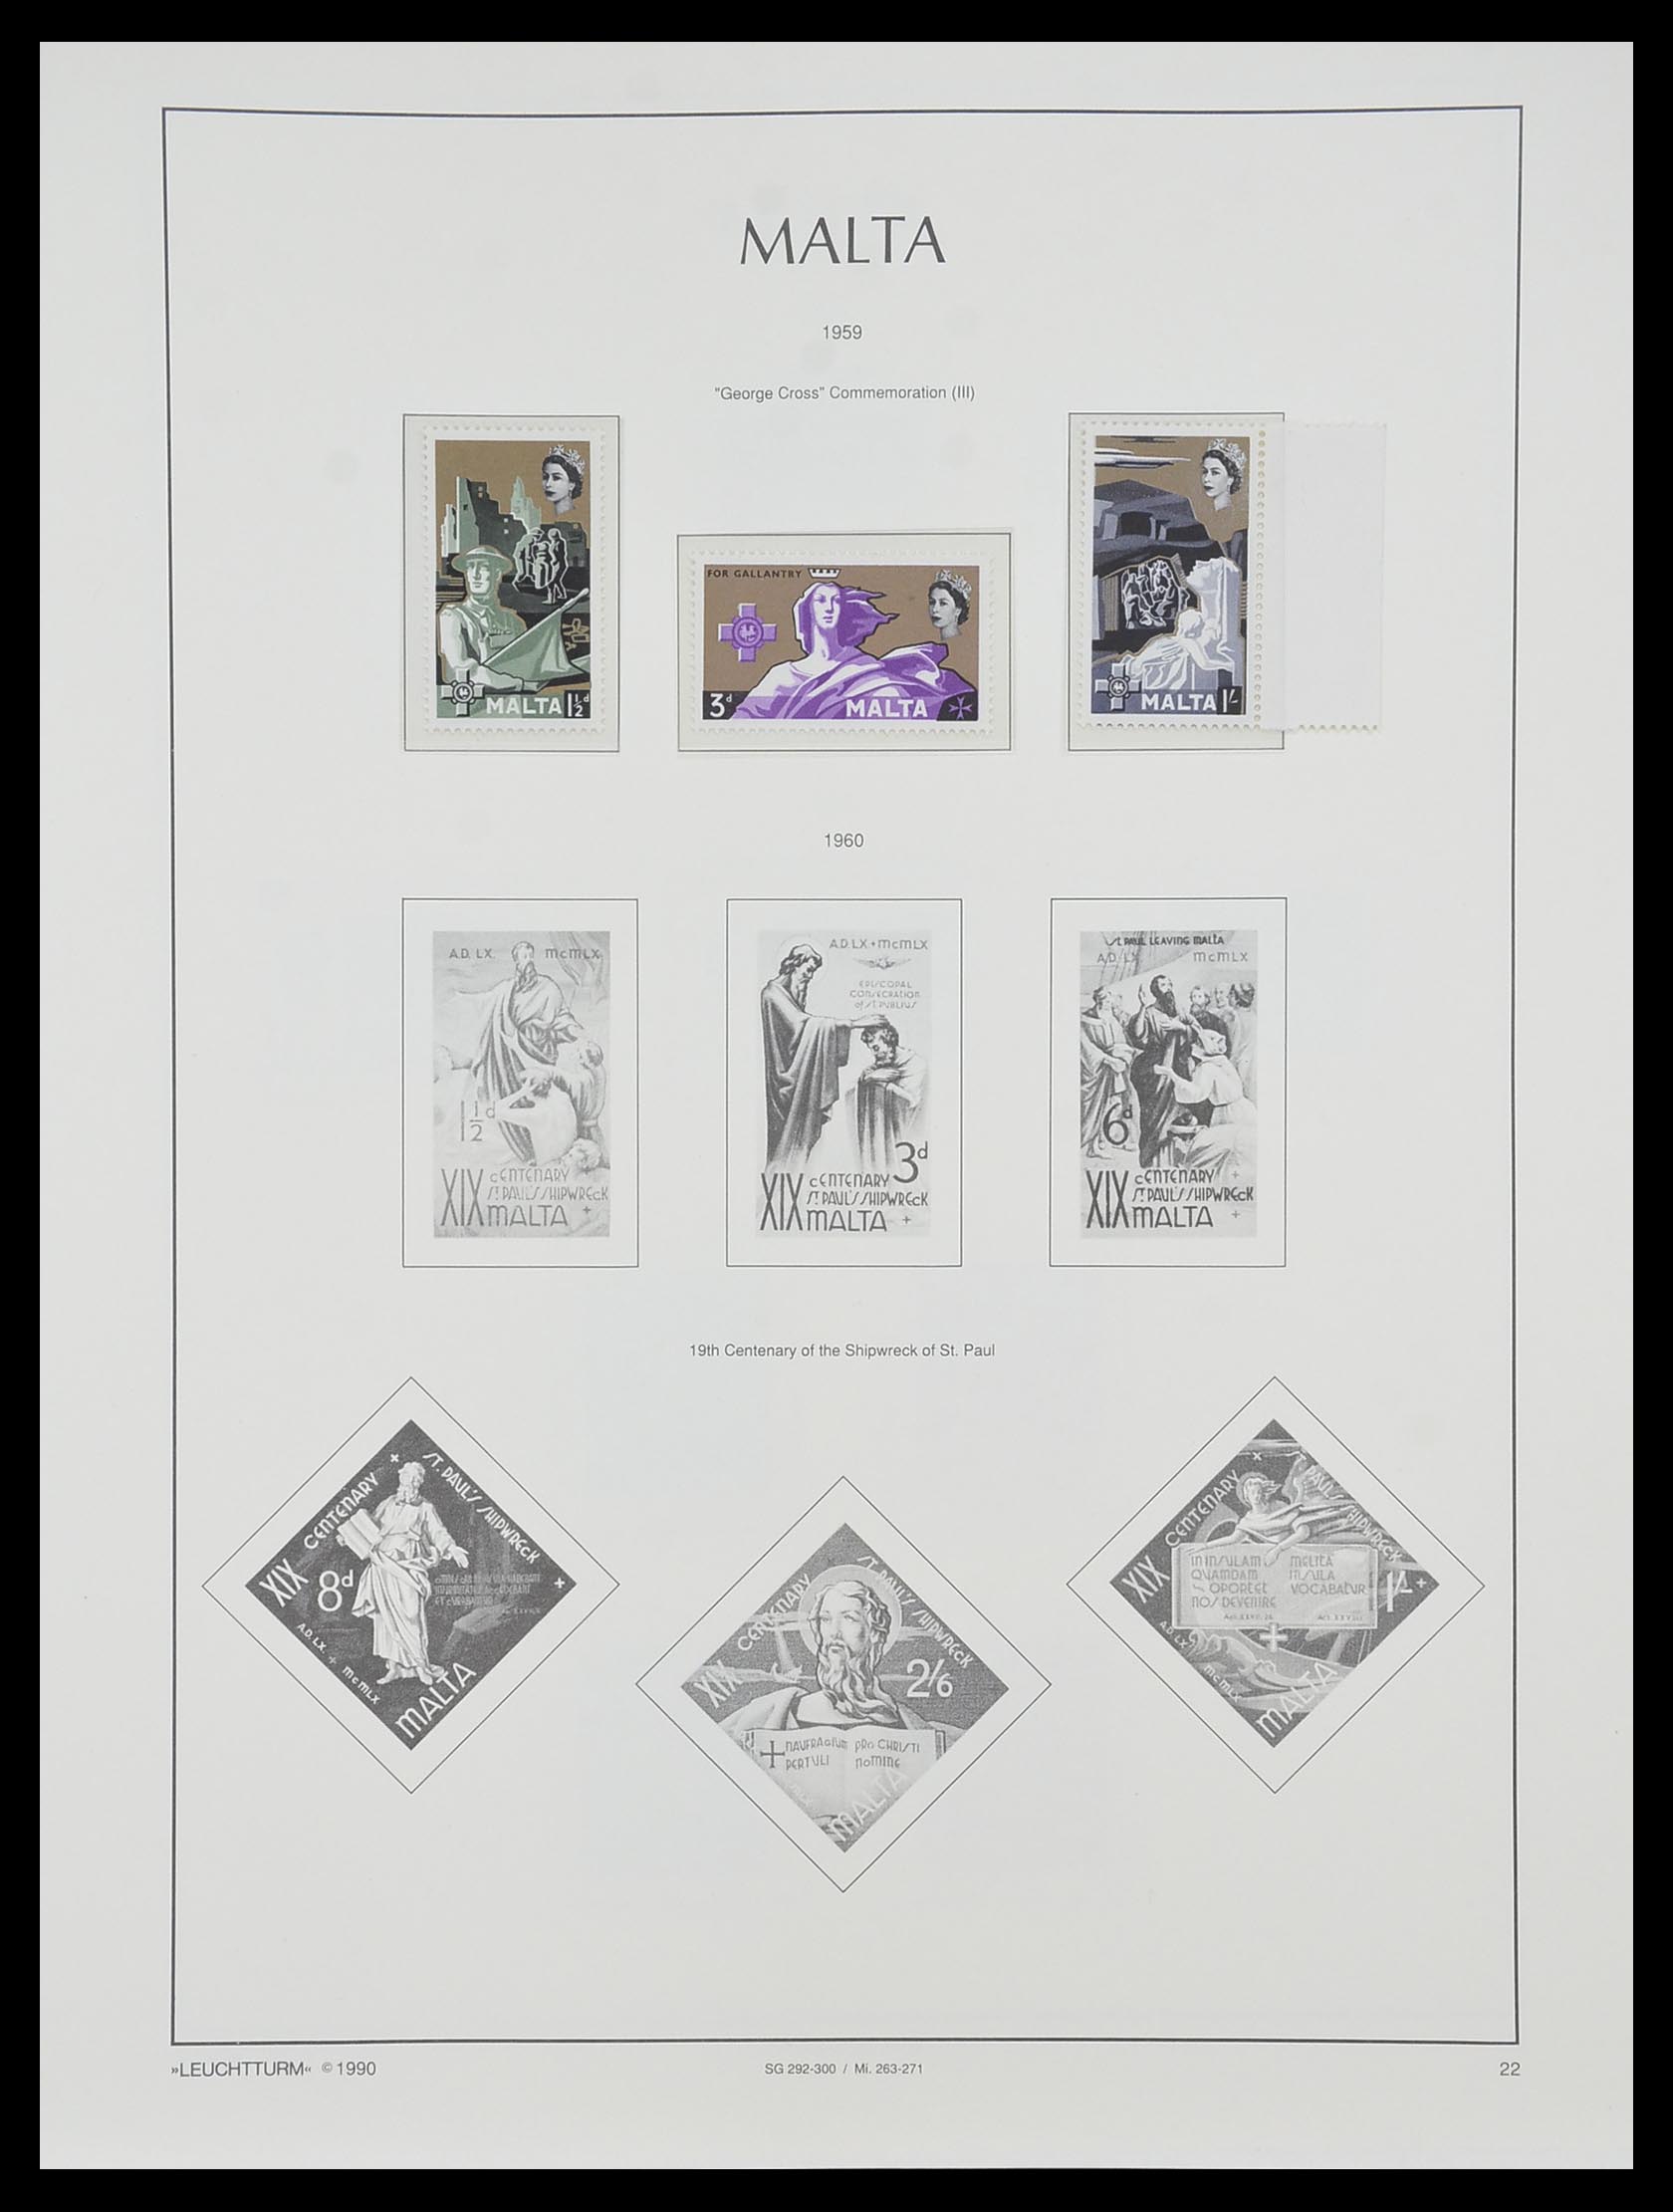 33968 027 - Stamp collection 33968 Malta 1861-2001.